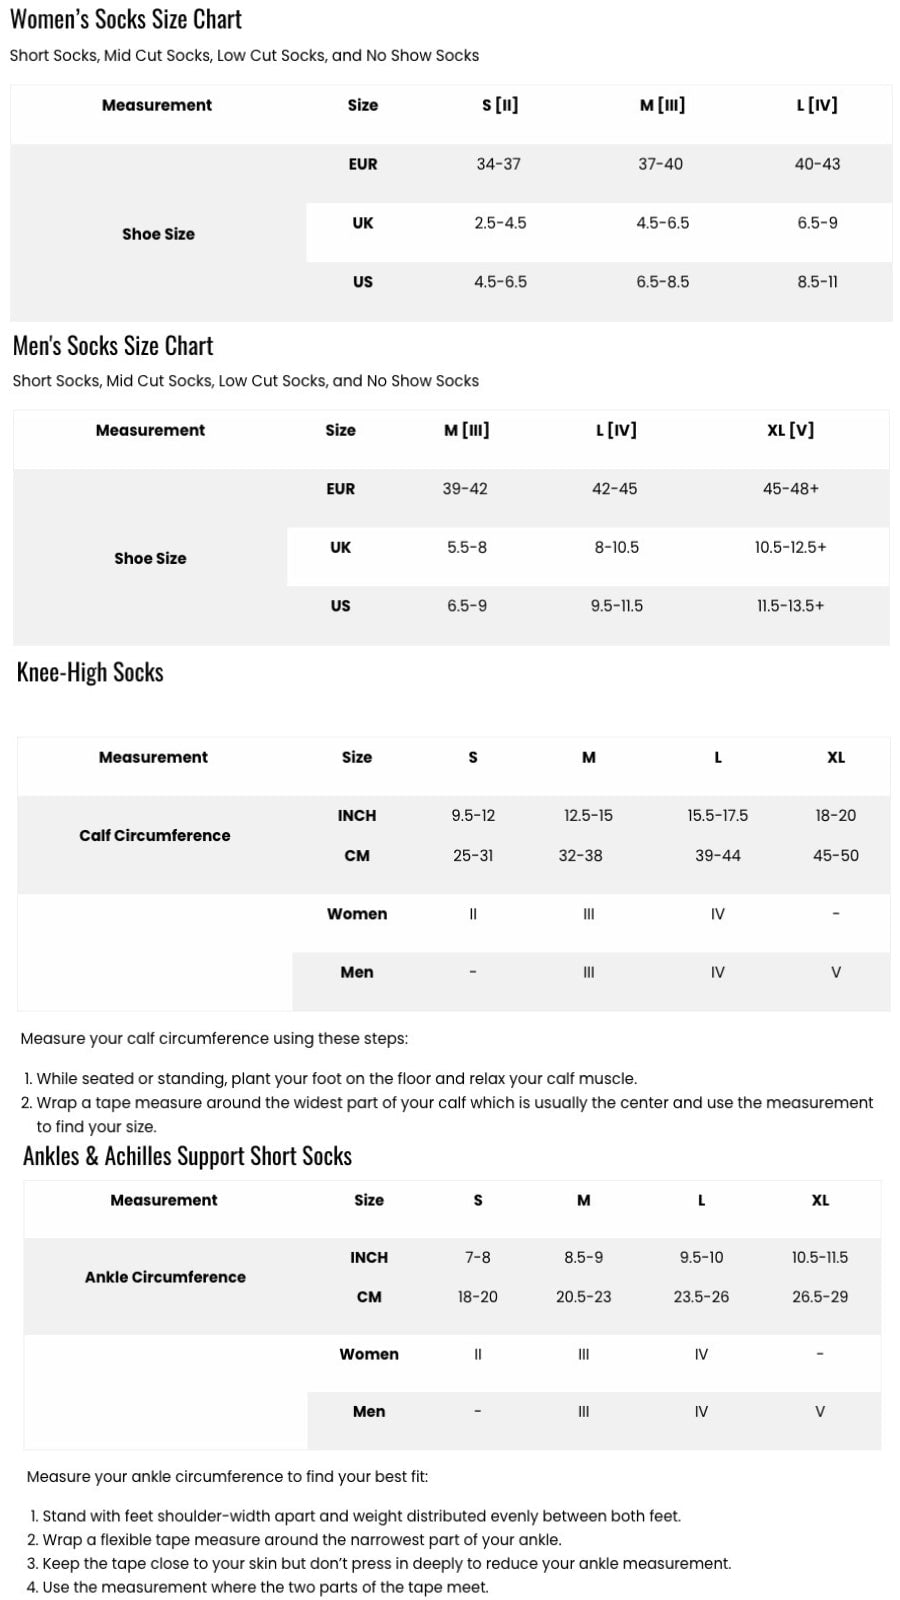 Achilles Support Short Socks, Women Size Chart - SKU WO47562